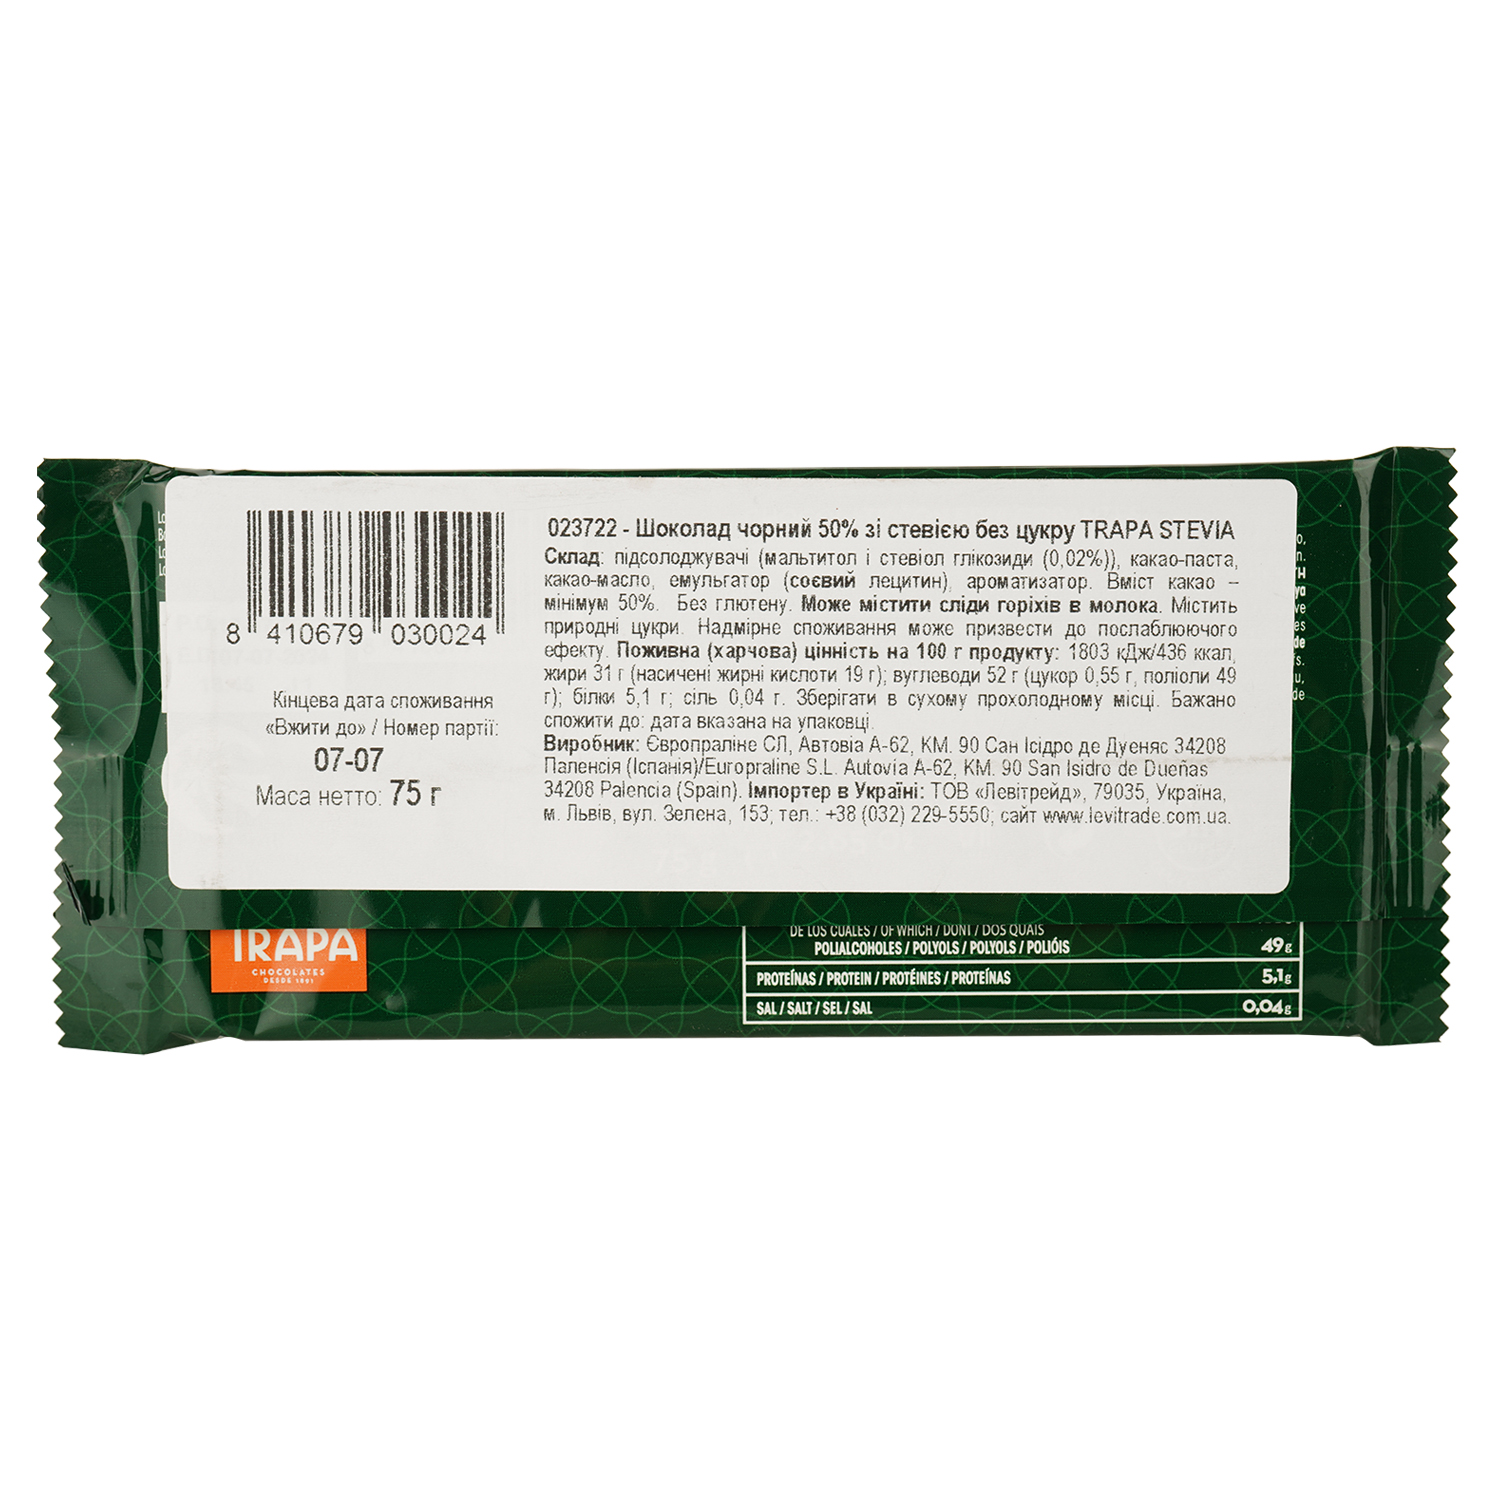 Шоколад черный Trapa Stevia, 75 г - фото 2